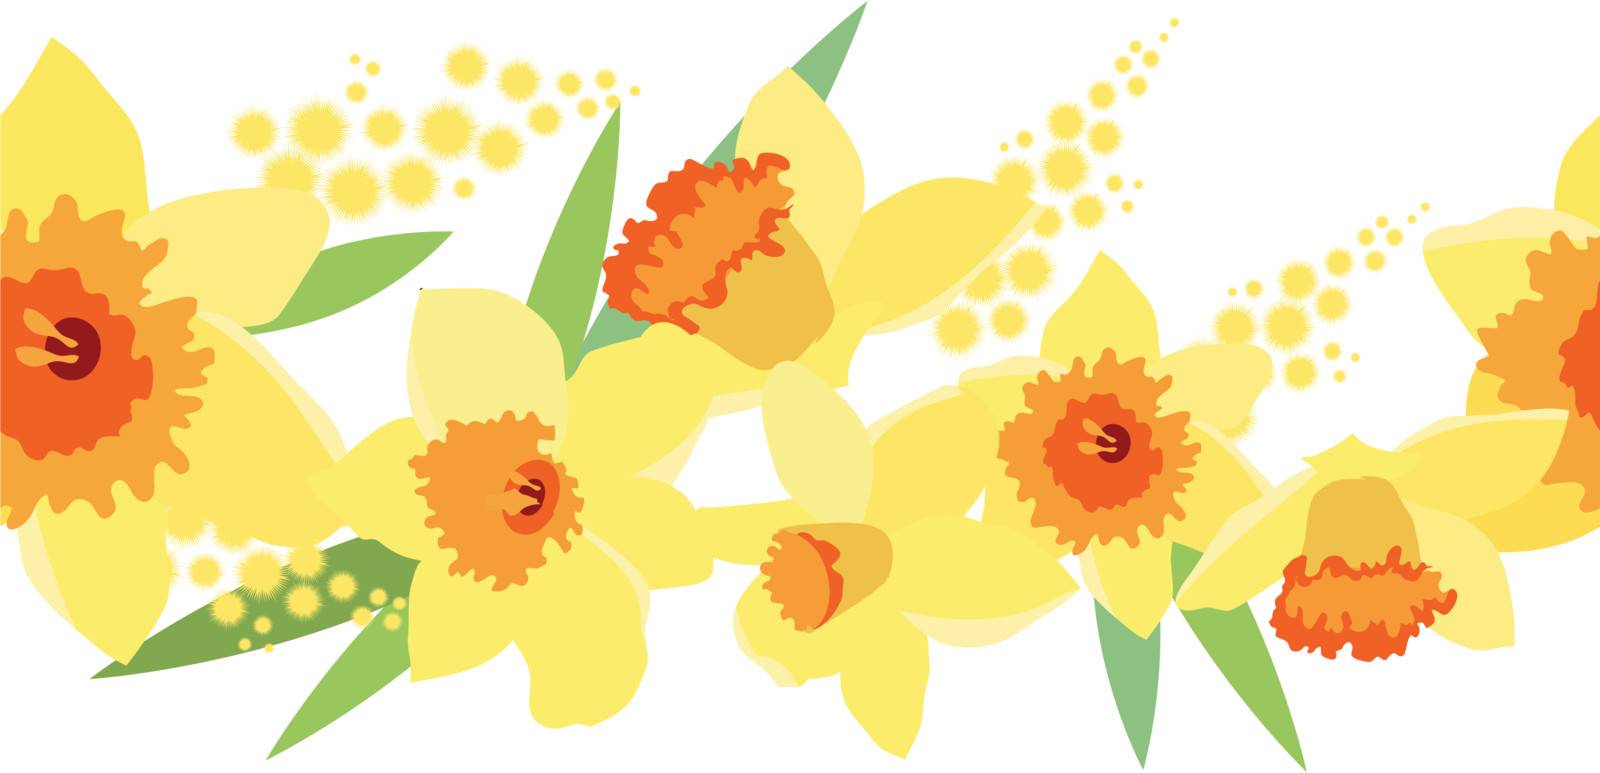 Seamless horizontal spring border with yellow daffodils